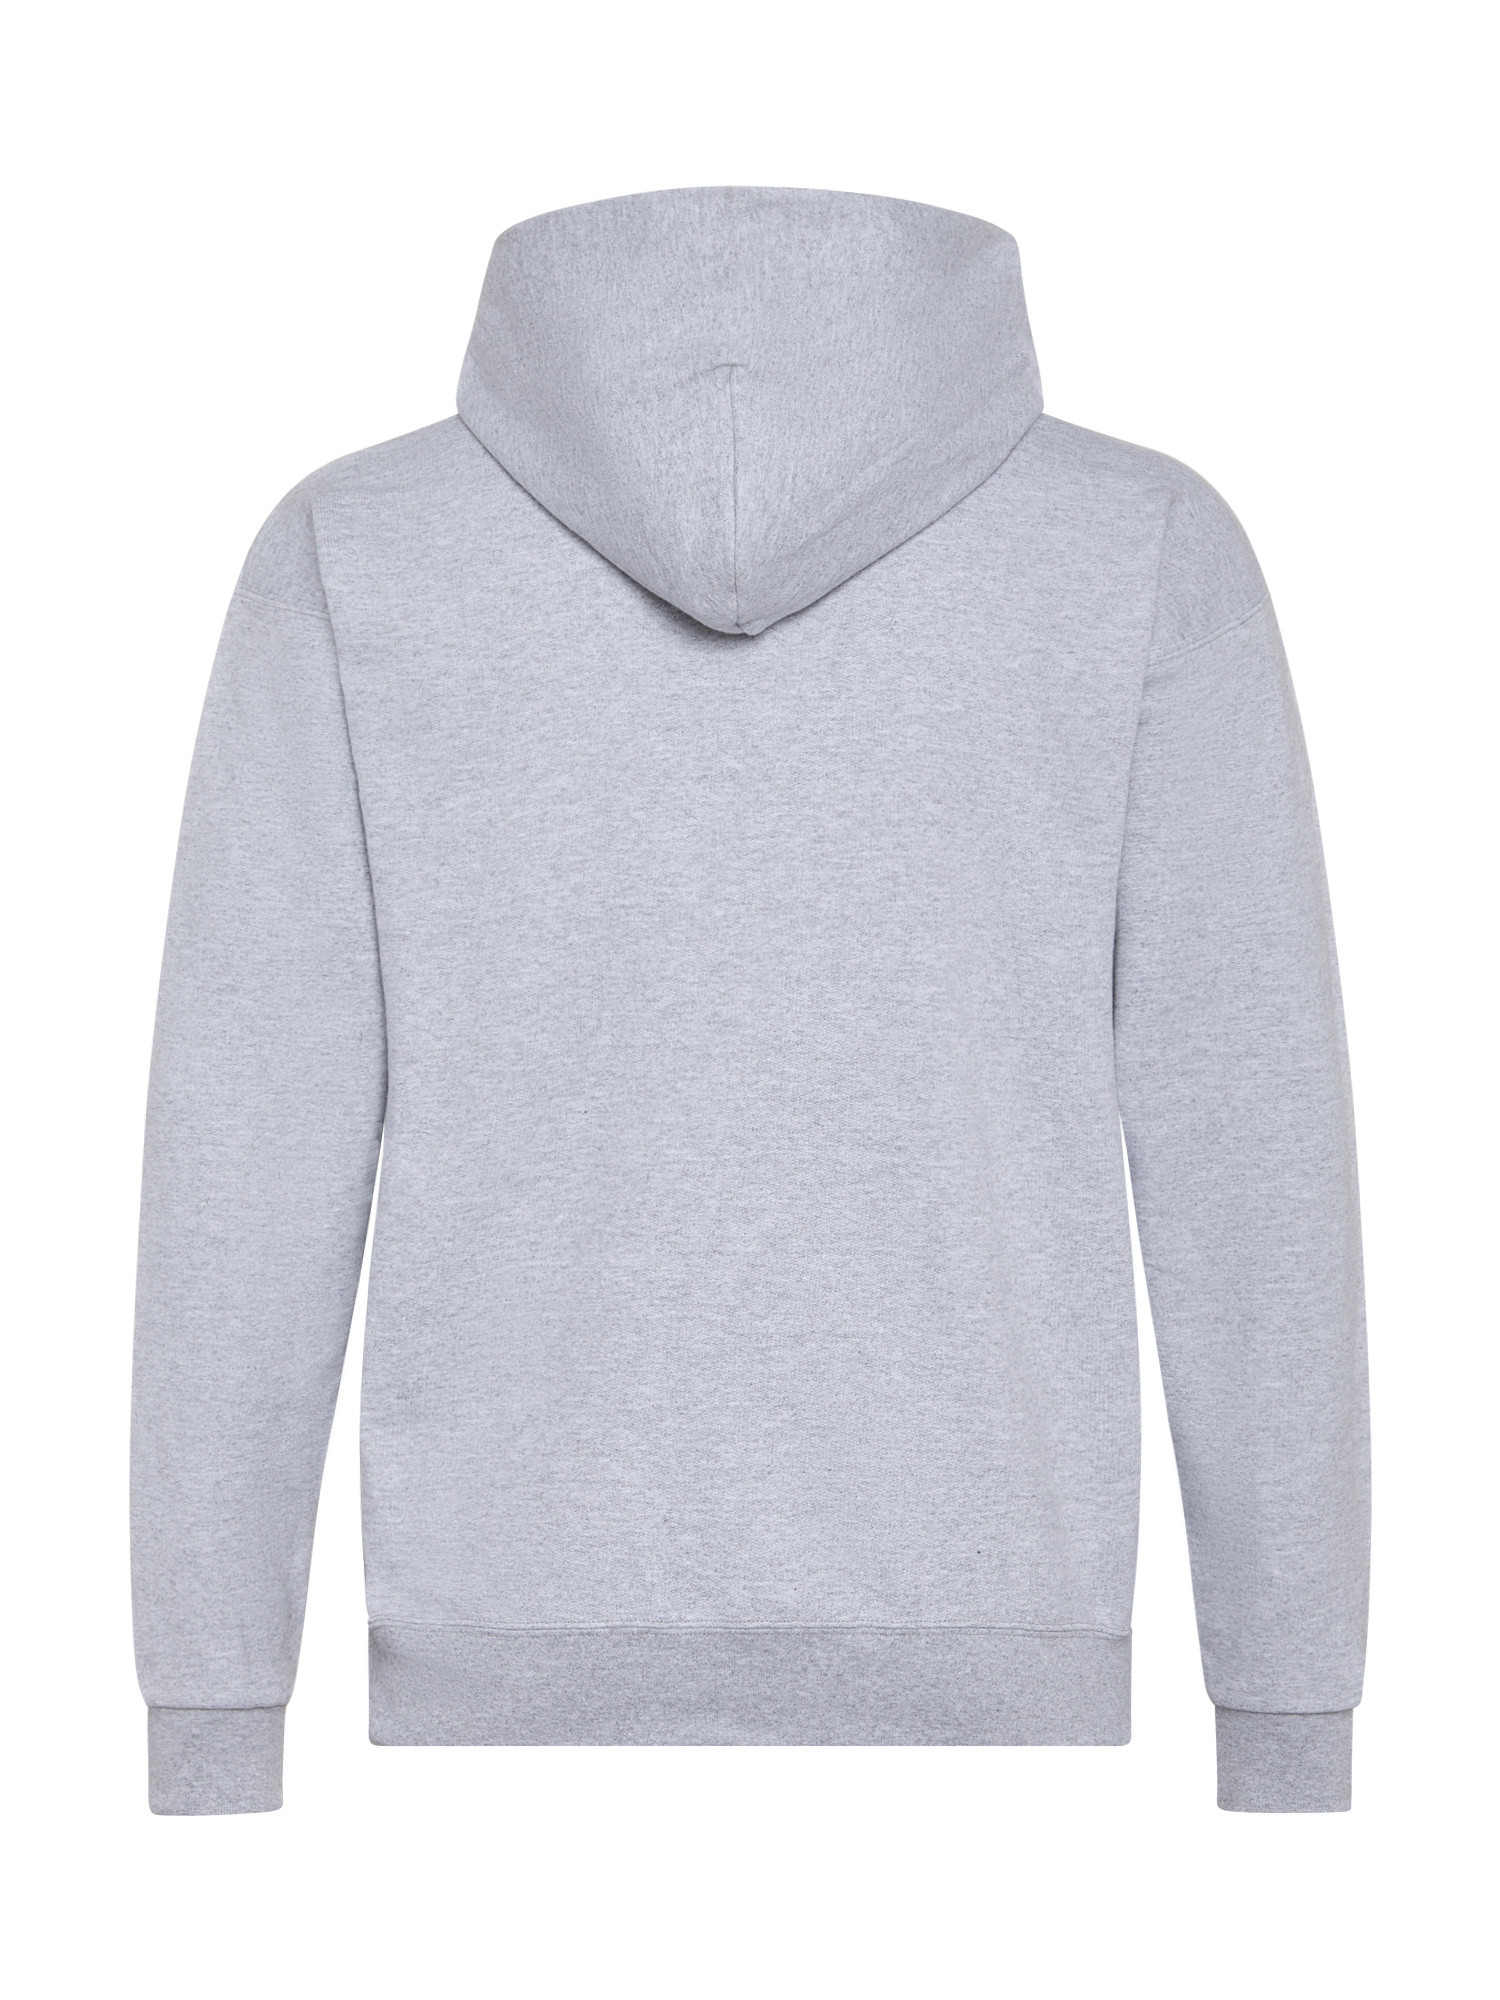 Thrasher - Outlined logo hoodie, Grey, large image number 1